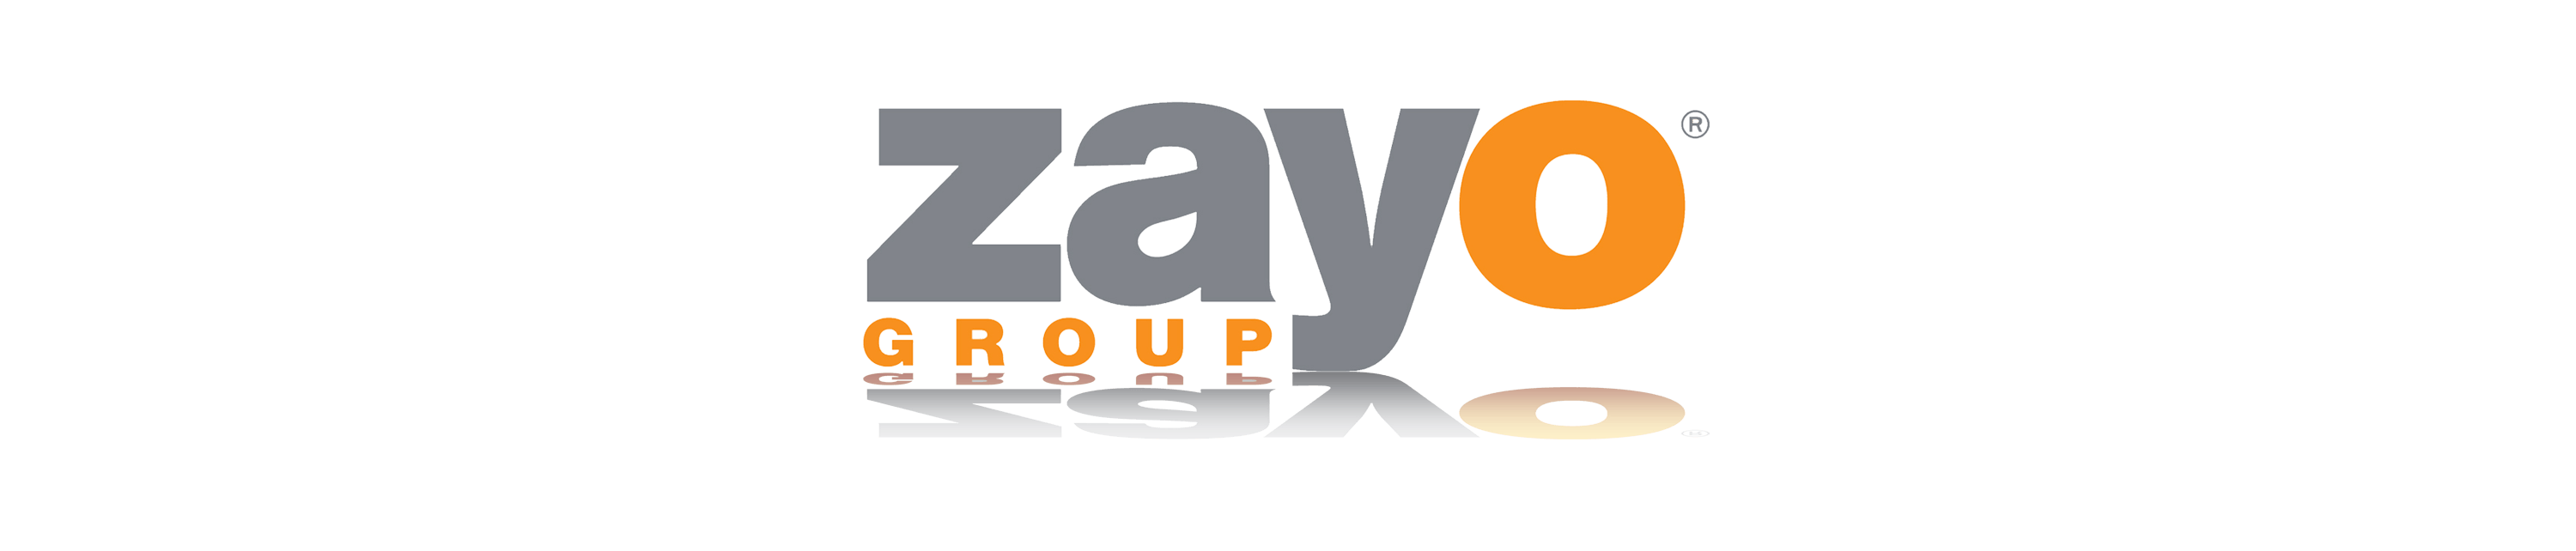 Zayo Logo - Zayo